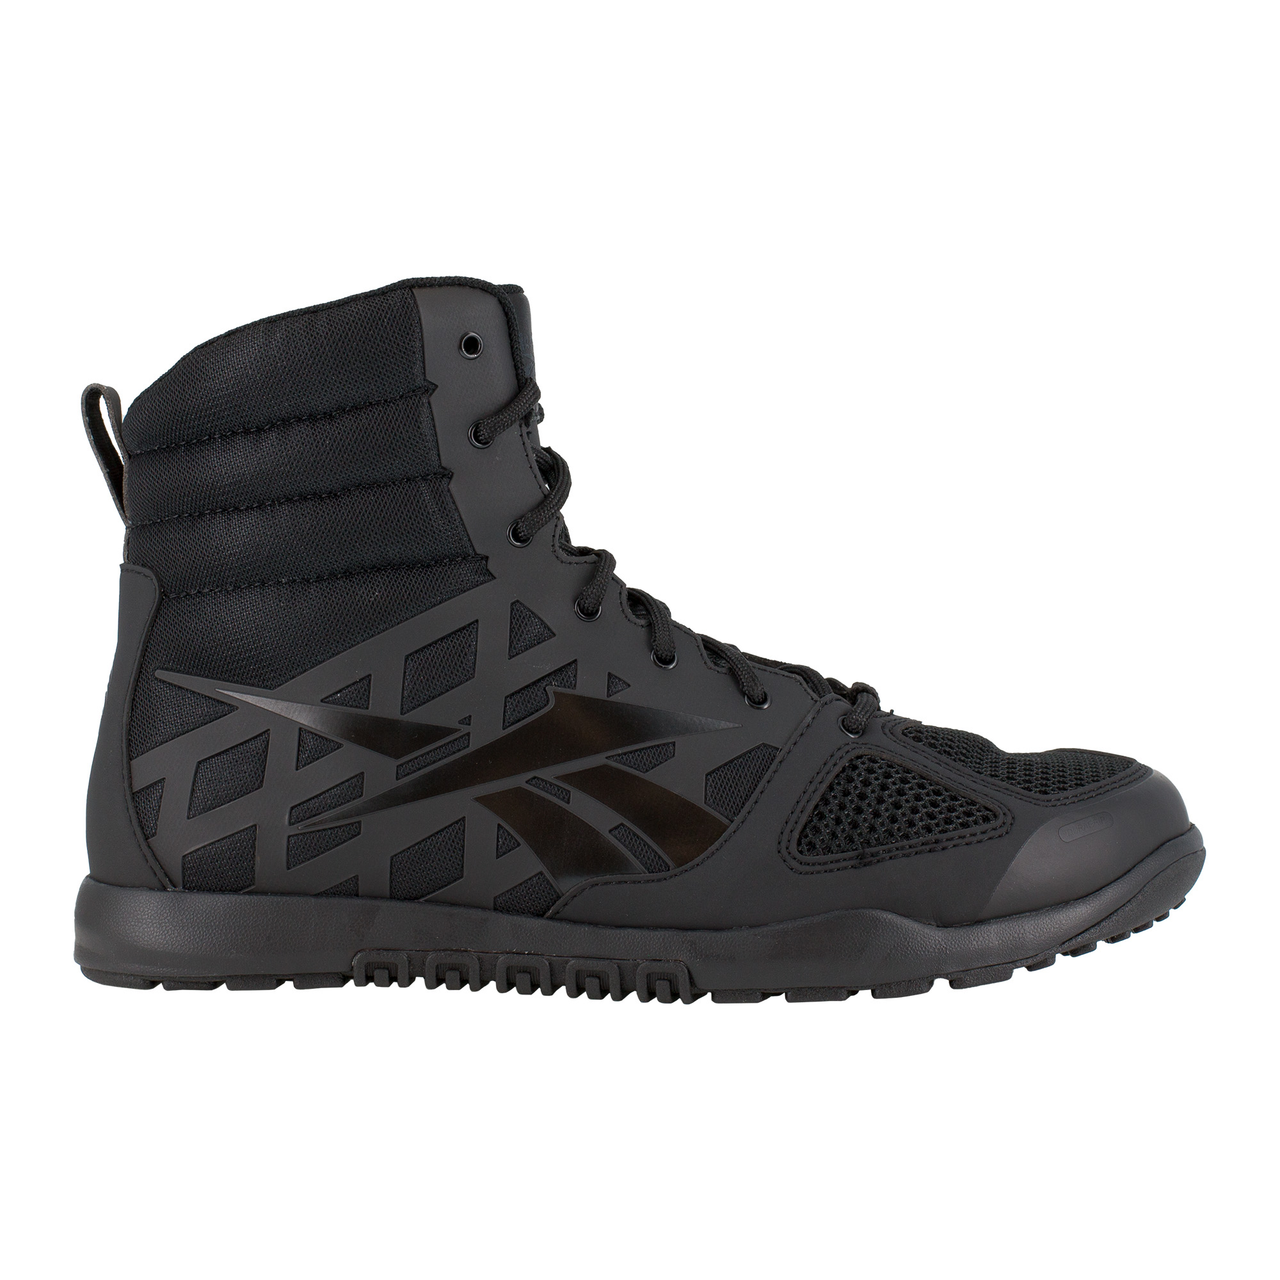 Reebok Tactical Boots - RB7210 - Men's Side-Zip Duty Boots